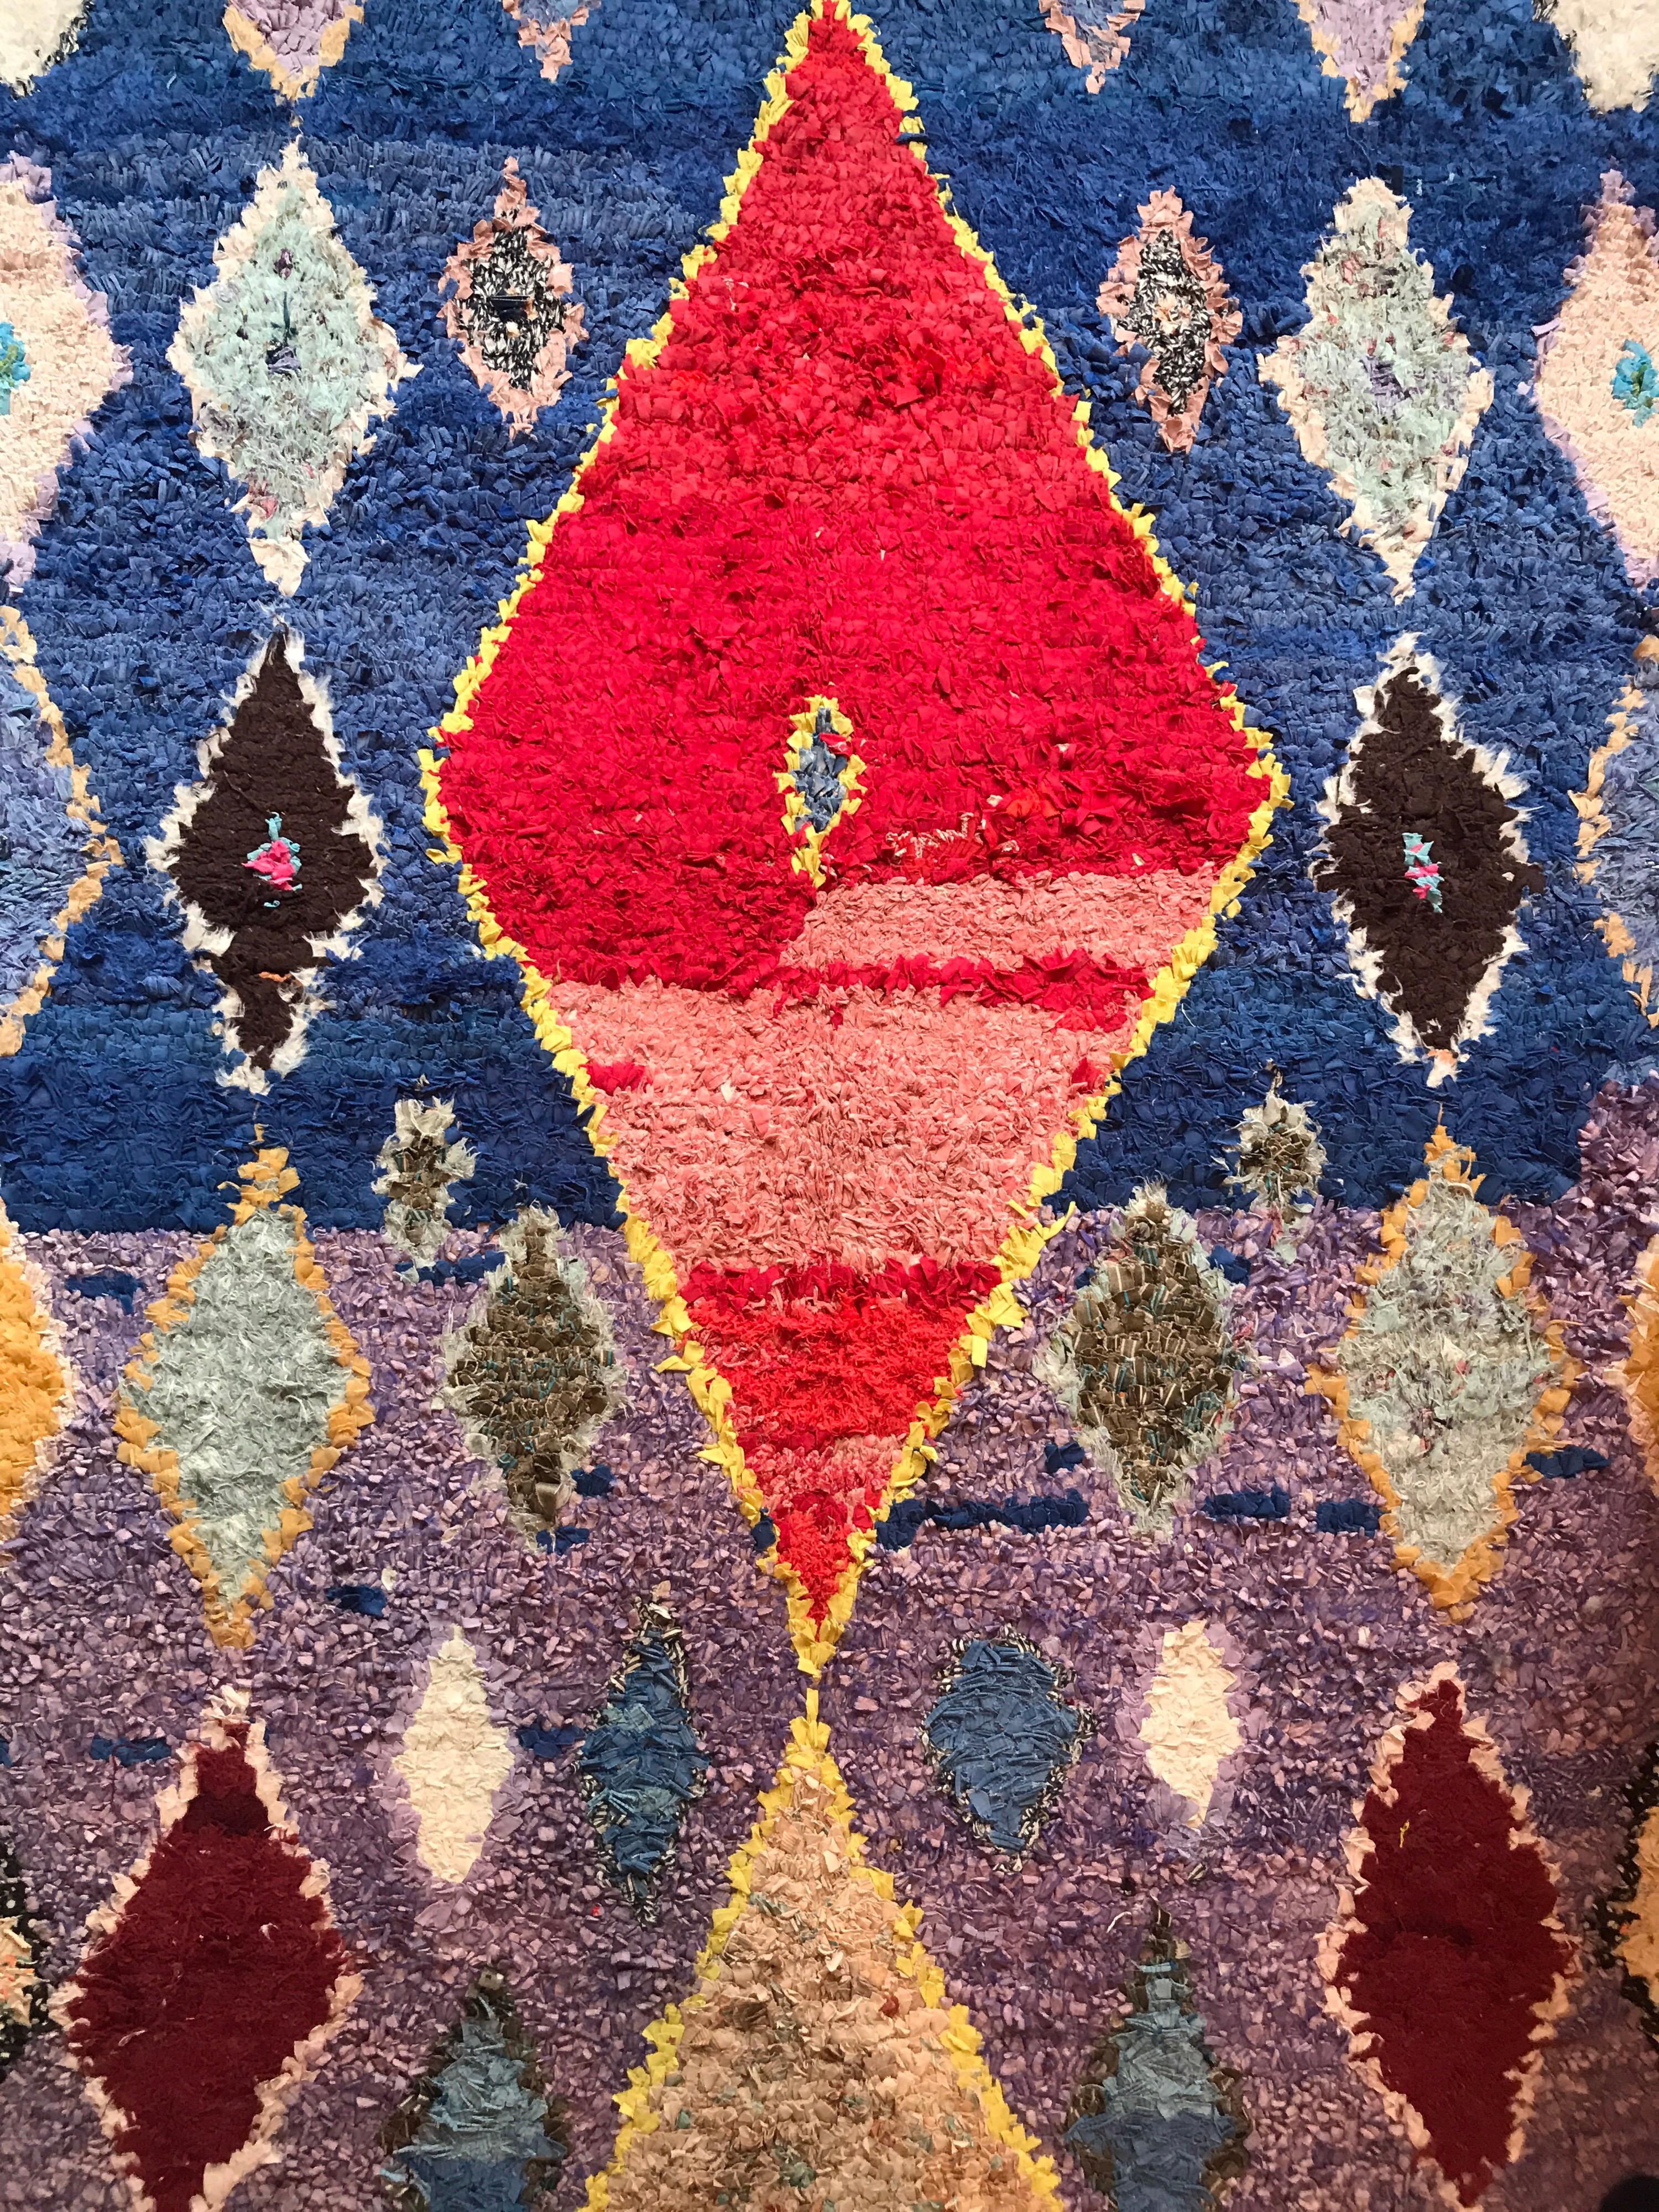 boucherouite rugs for sale